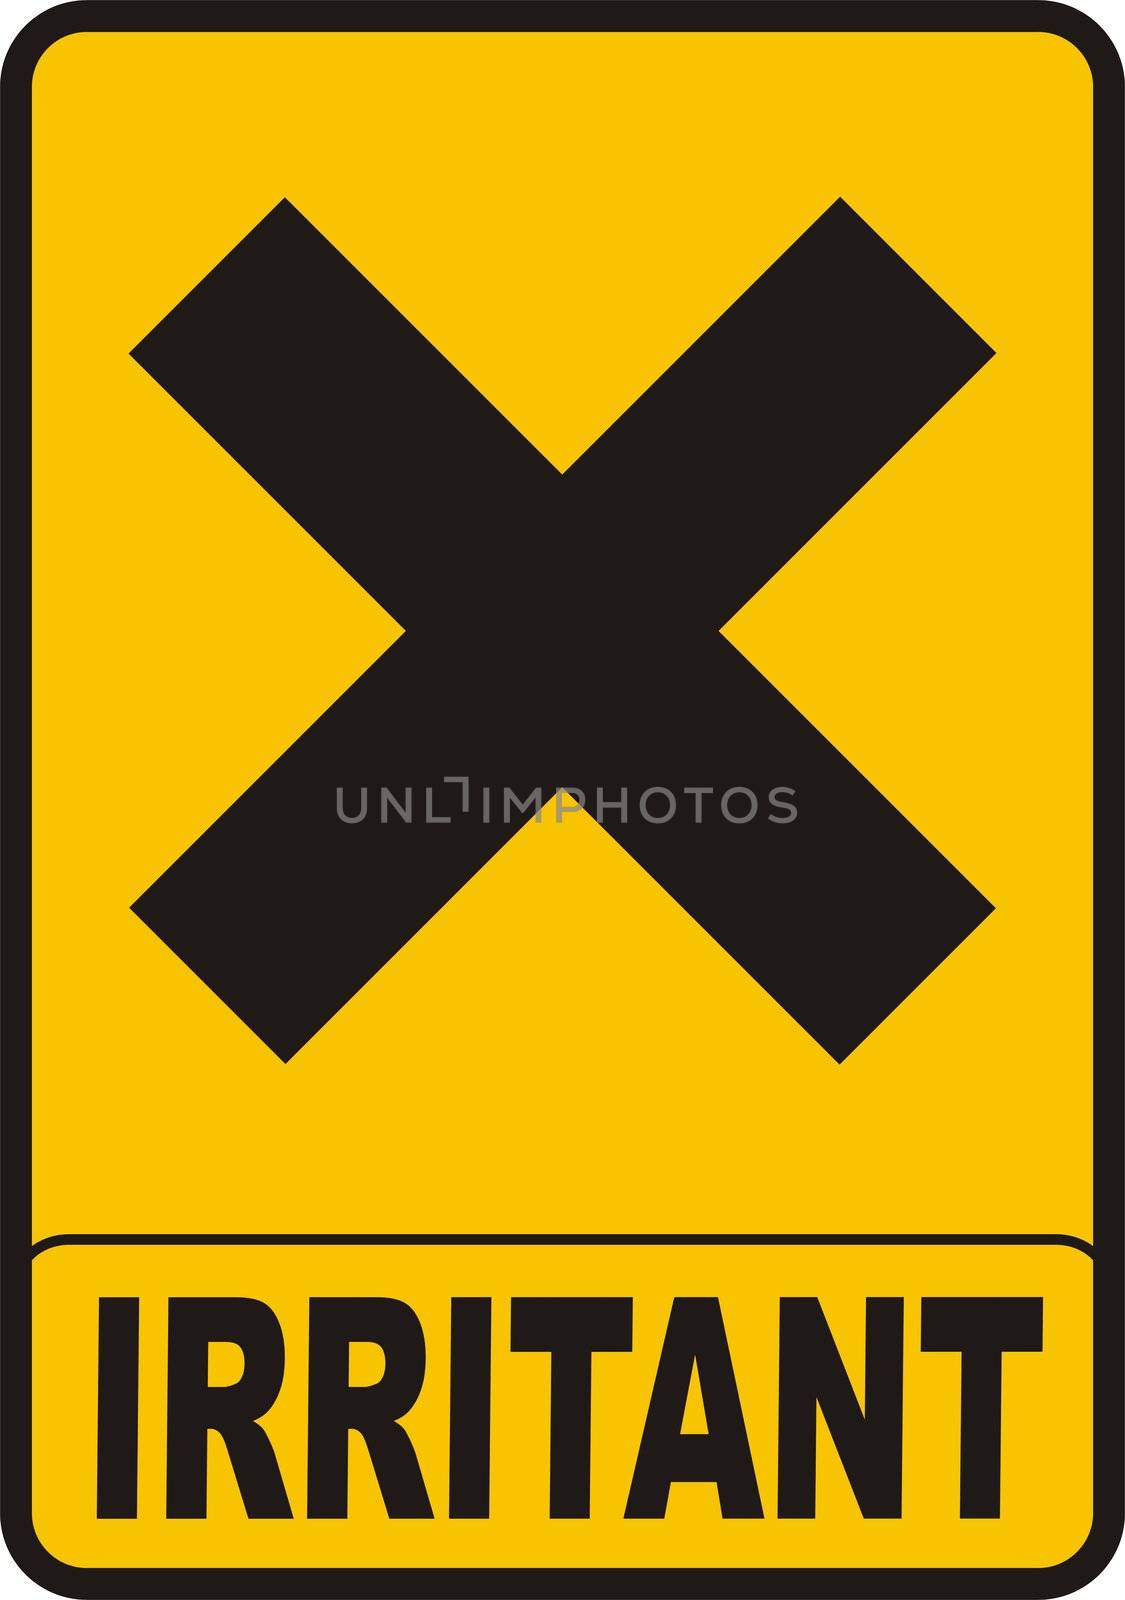 Irritant Sign by tony4urban